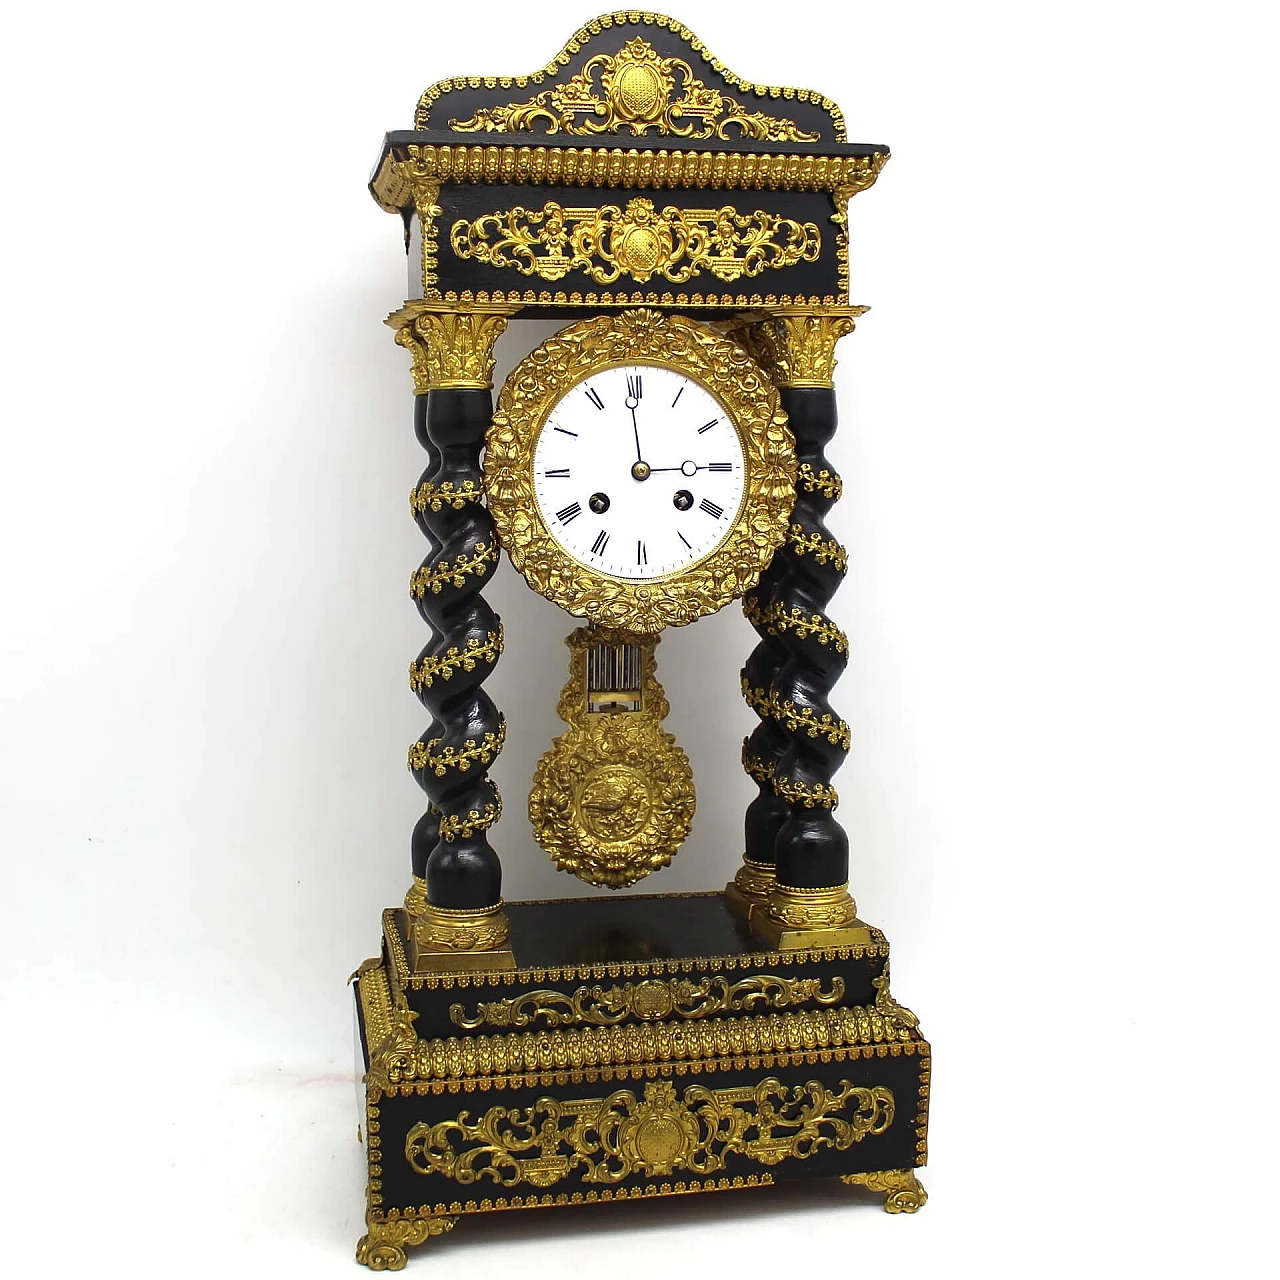 Napoleon III pendulum clock in ebonized wood and gilded bronzes, 19th century. 1336771